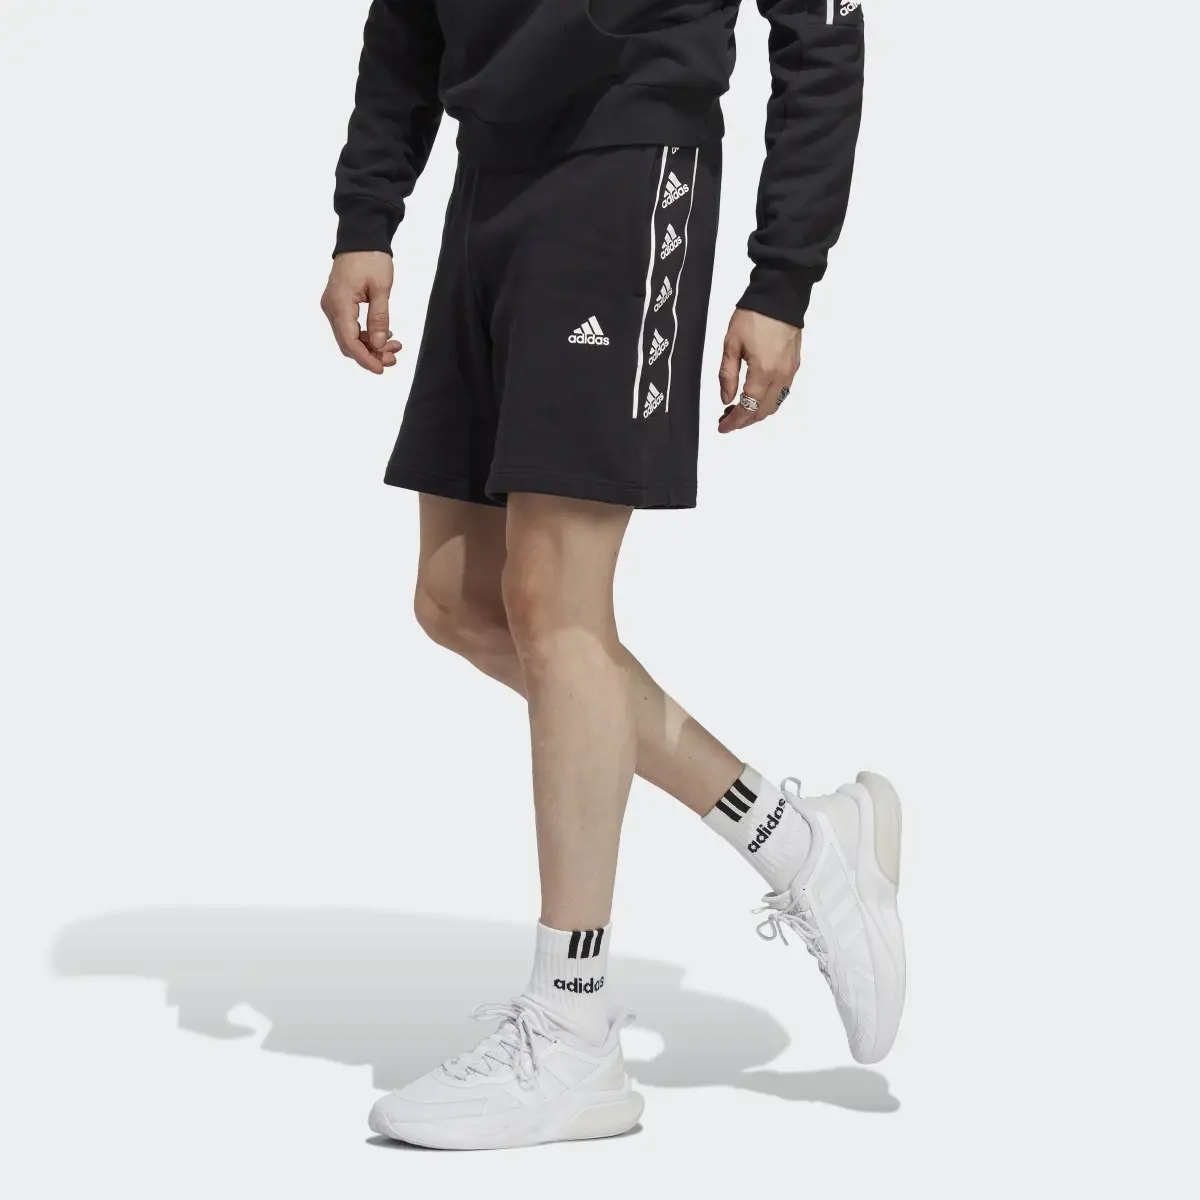 Adidas Brandlove Shorts. 1